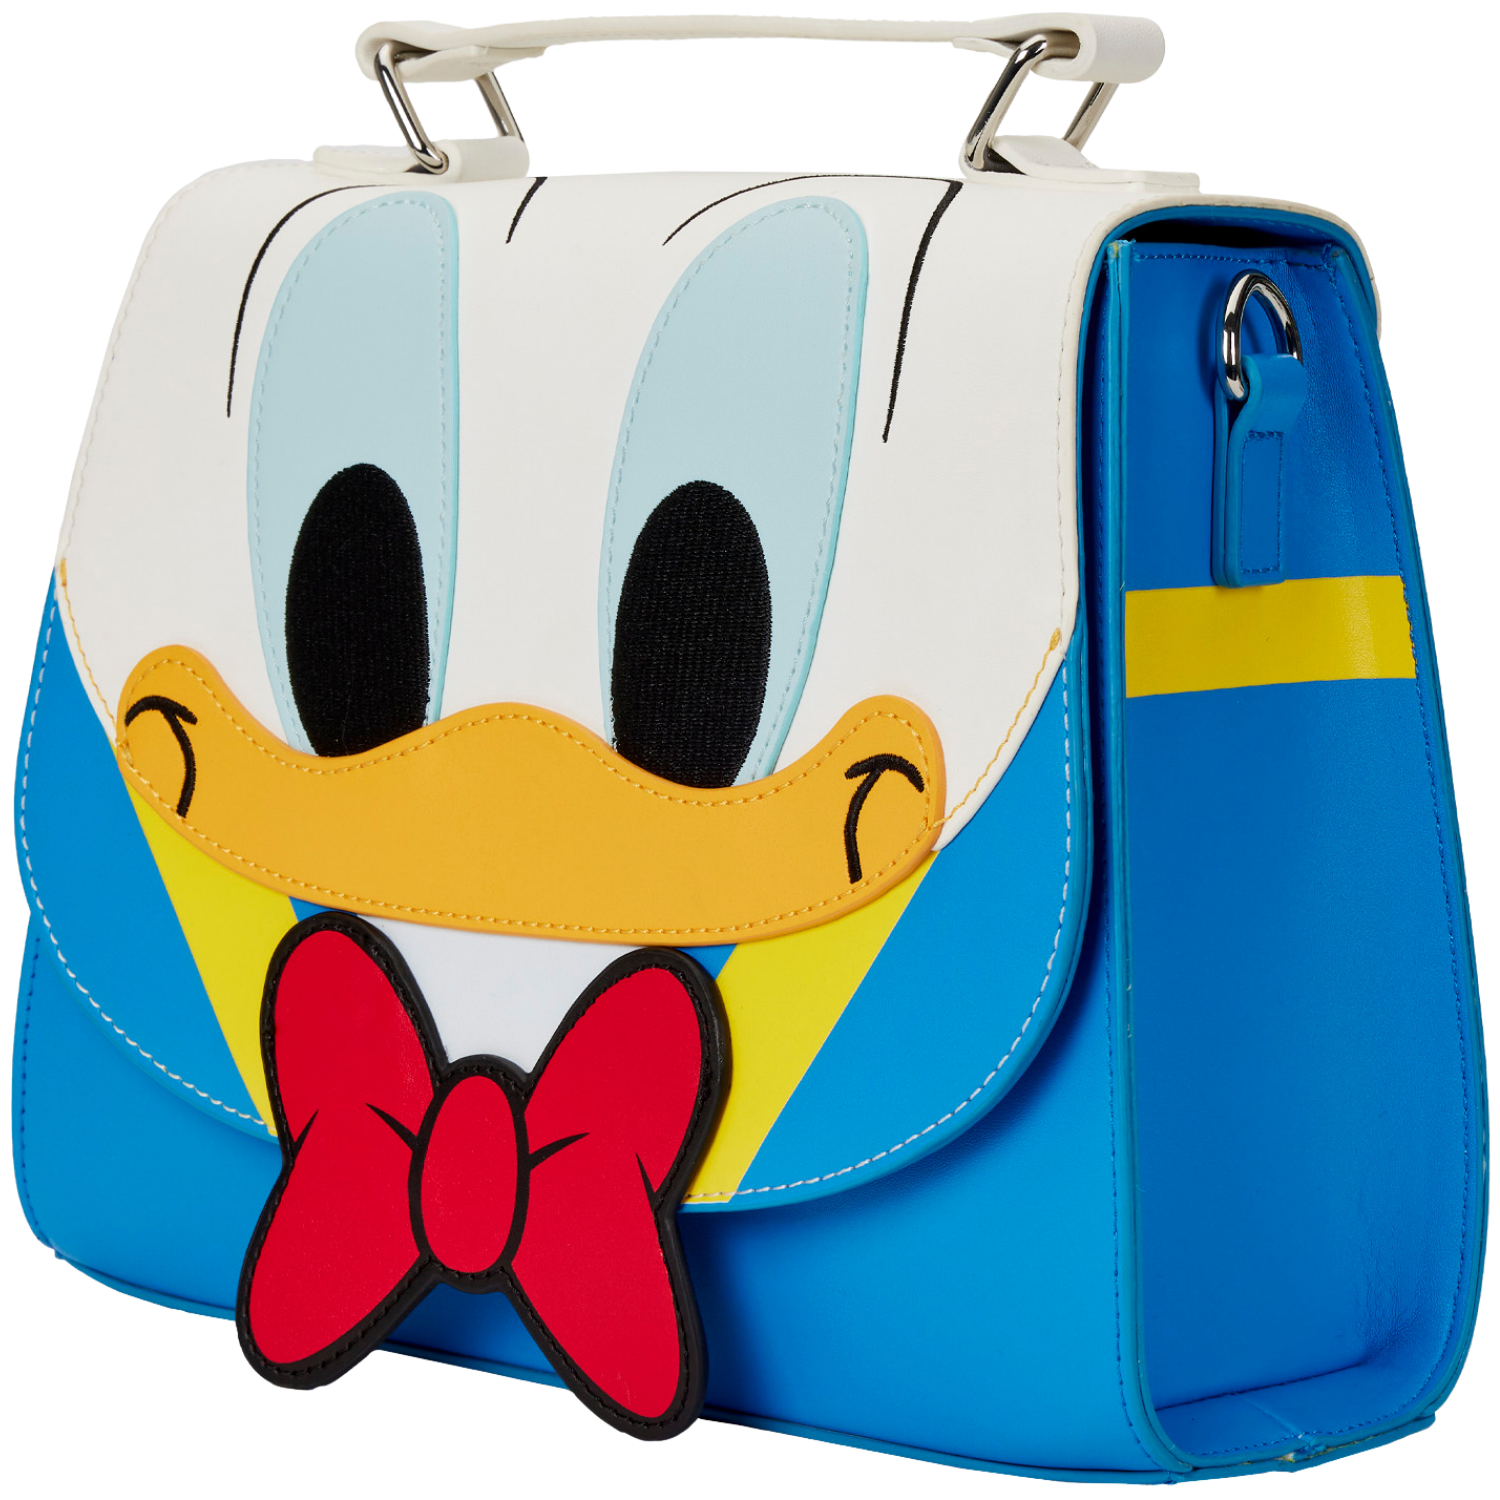 Gucci X Donald Duck Bag : r/FashionReps